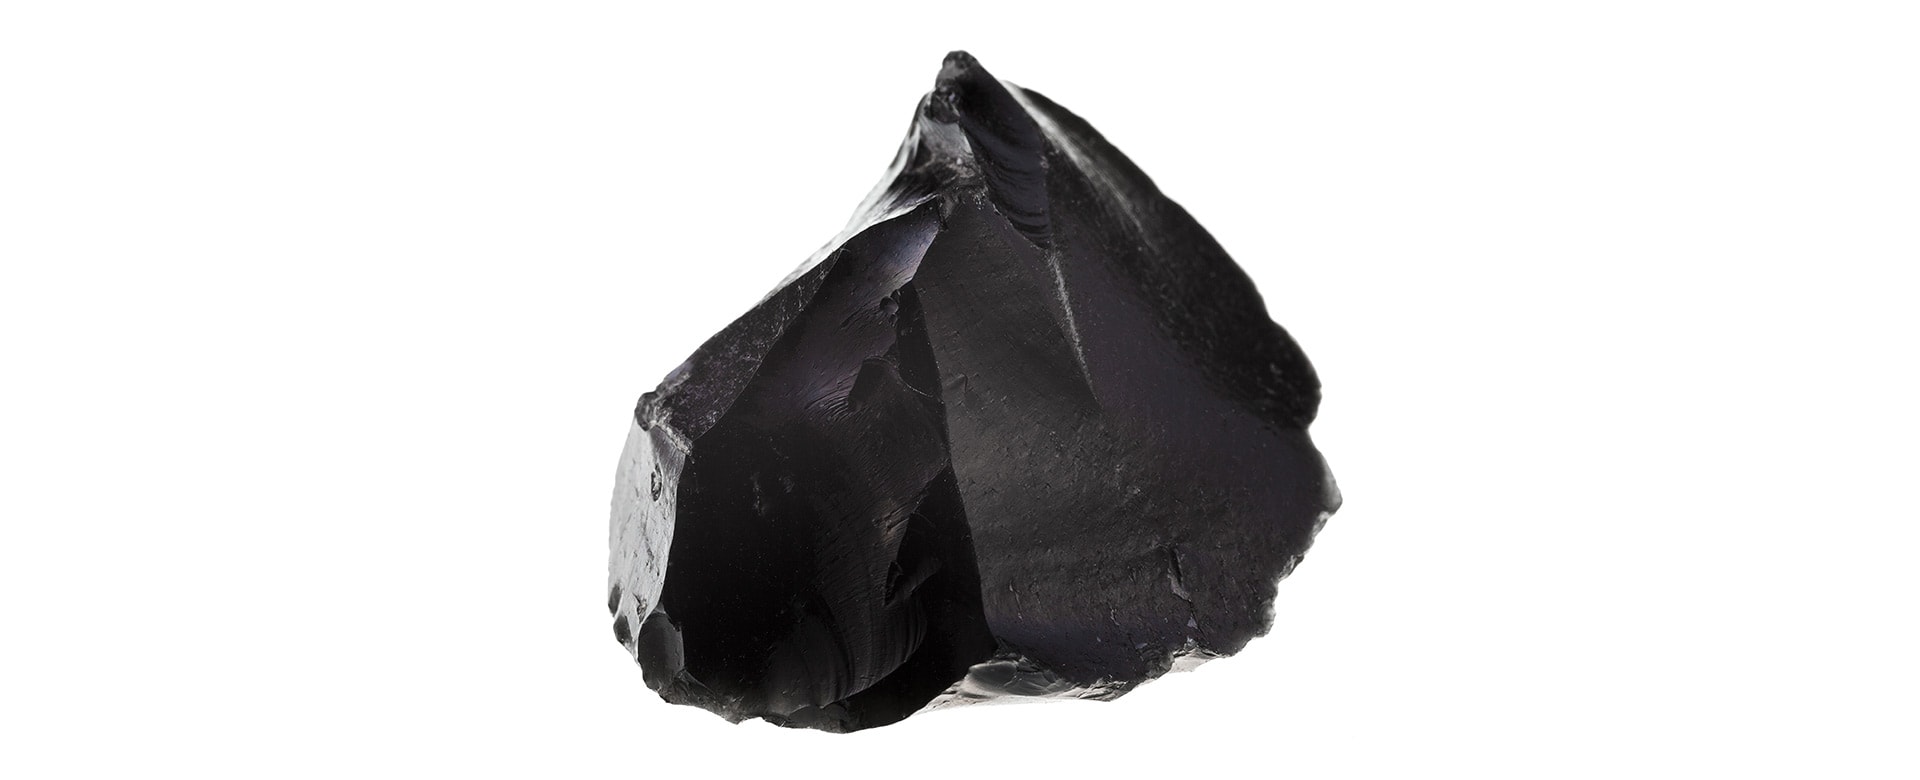 Black Obsidian 1